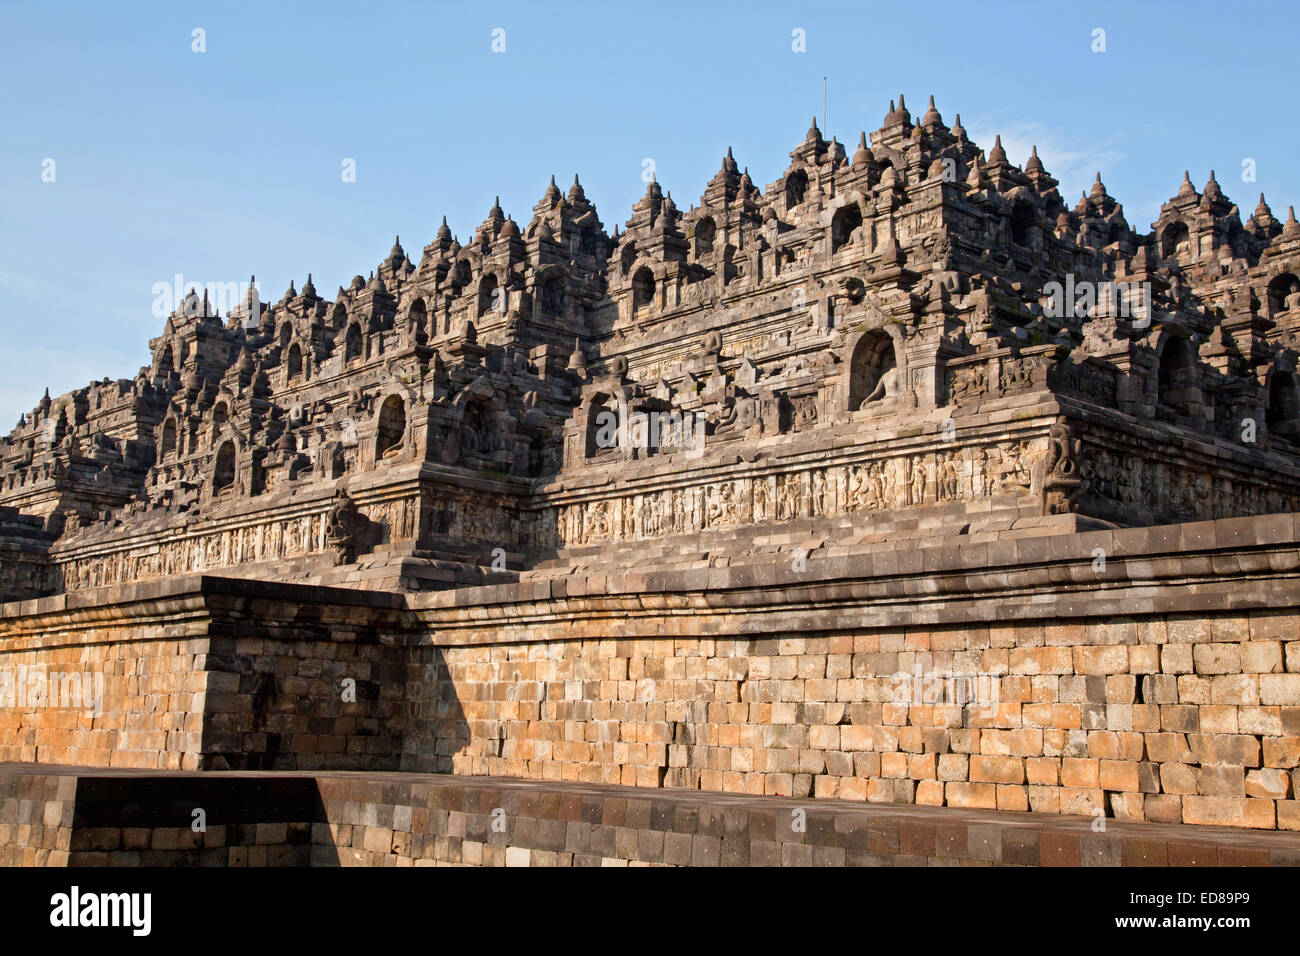 Architecture Borobudur Temple Stupa Ruin in Yogyakarta Indonesia. Stock Photo